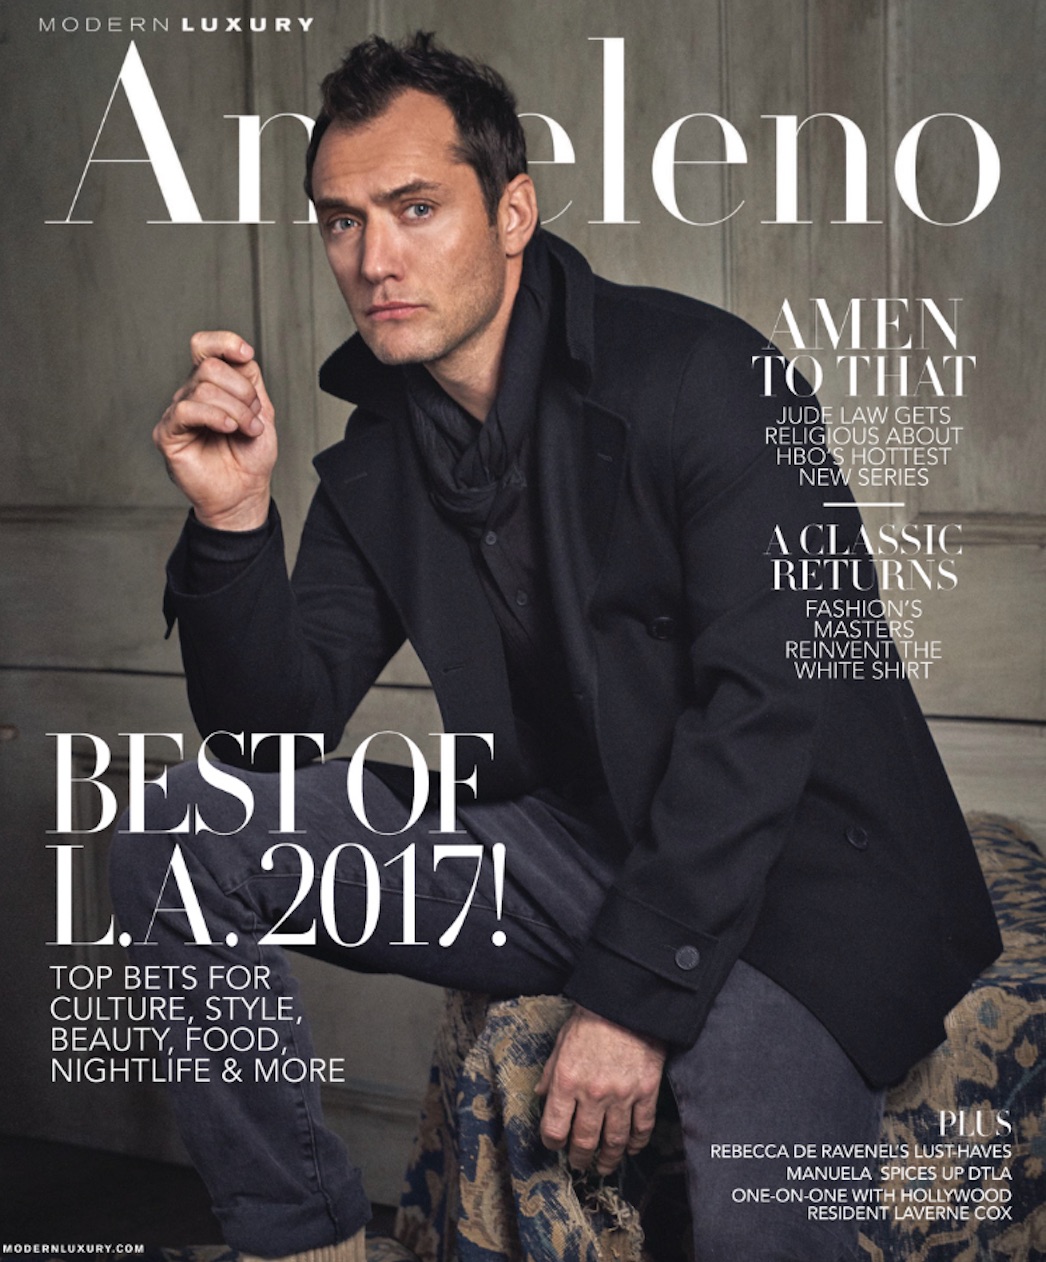 Angeleno Feb 2017-cover